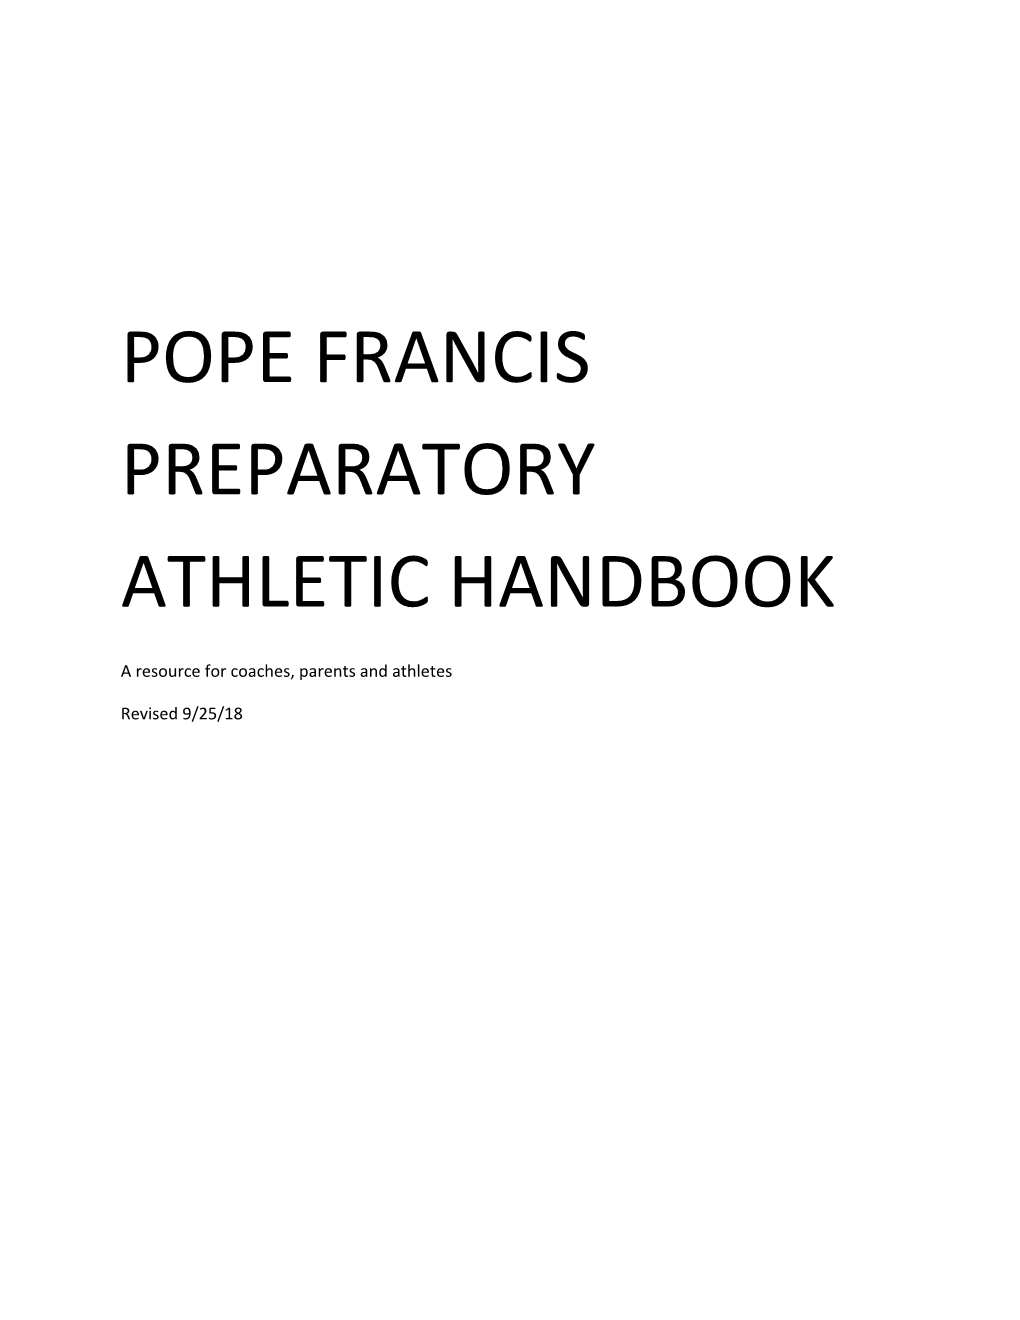 Pope Francis Preparatory Athletic Handbook